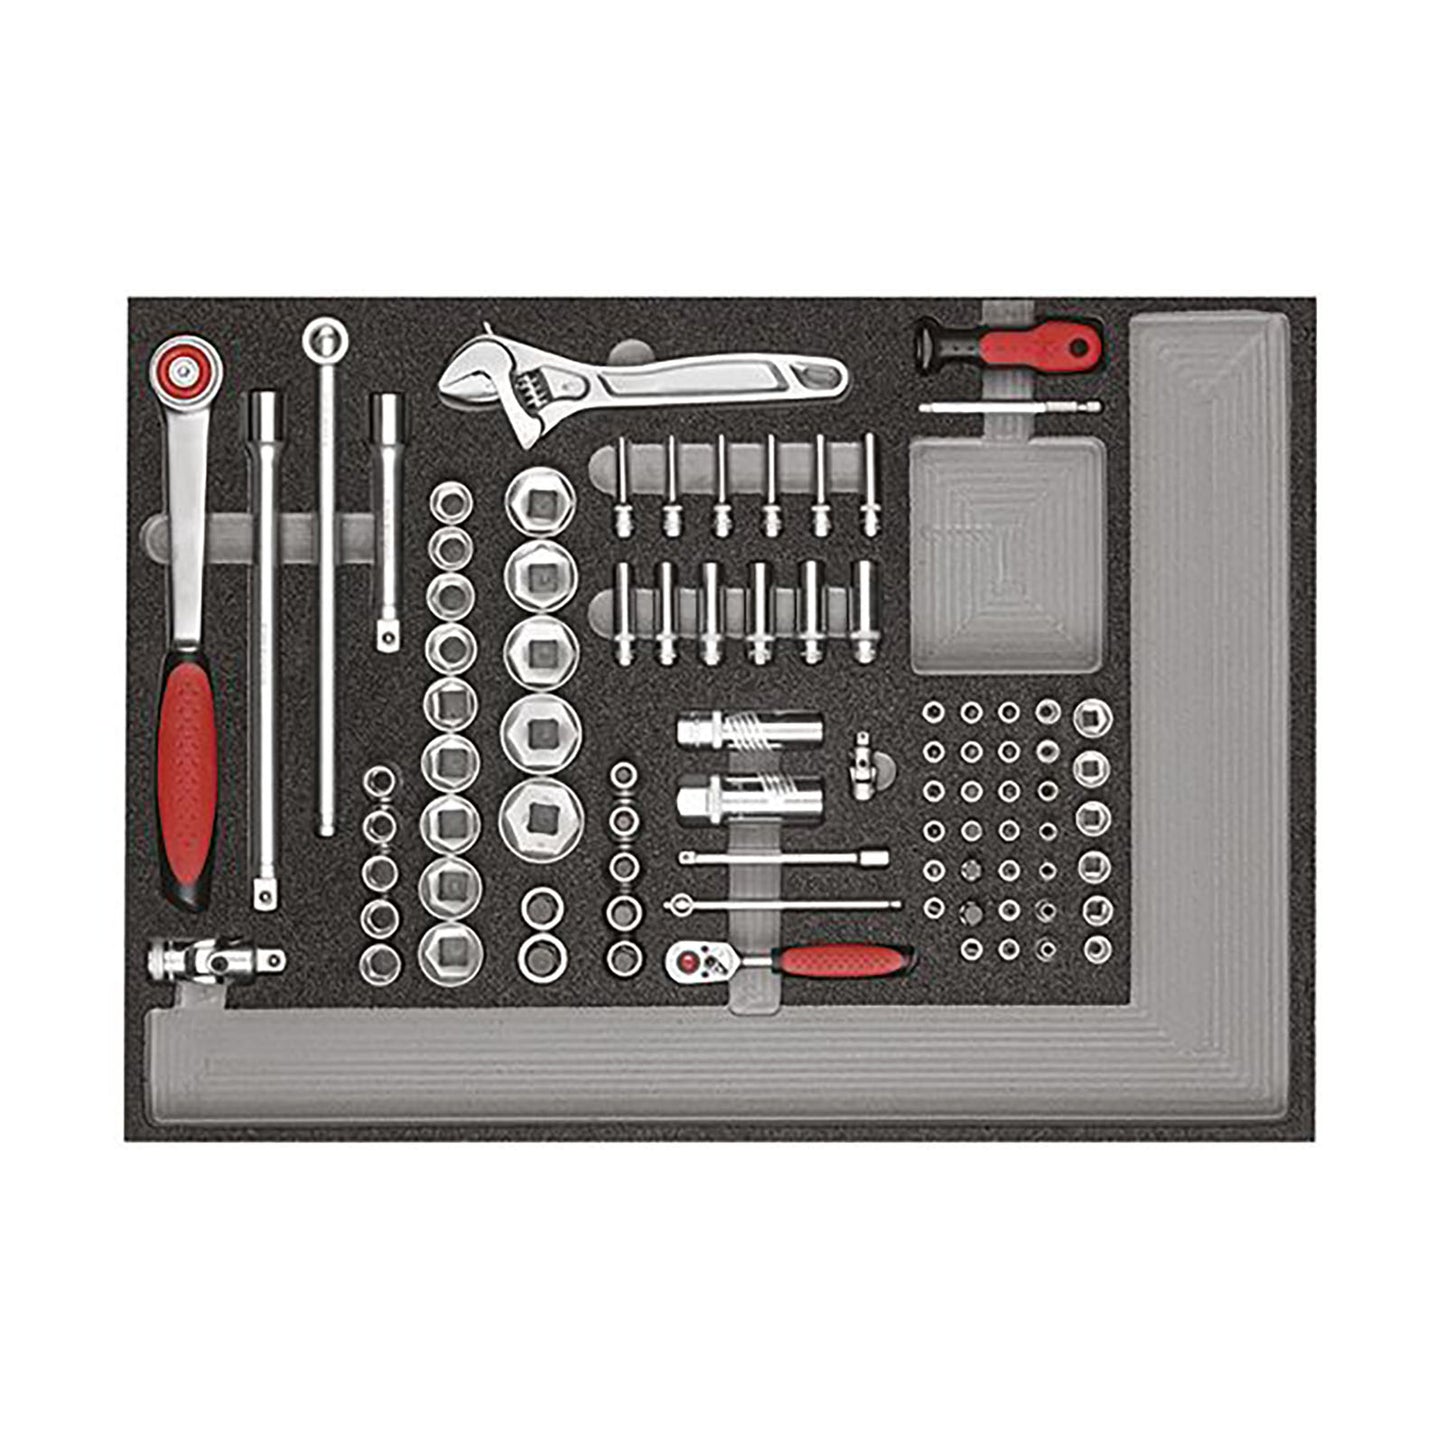 GEDORE rouge R21560005 - Servante d'atelier MÉCANICIEN avec assortiment de 129 outils (3300031)